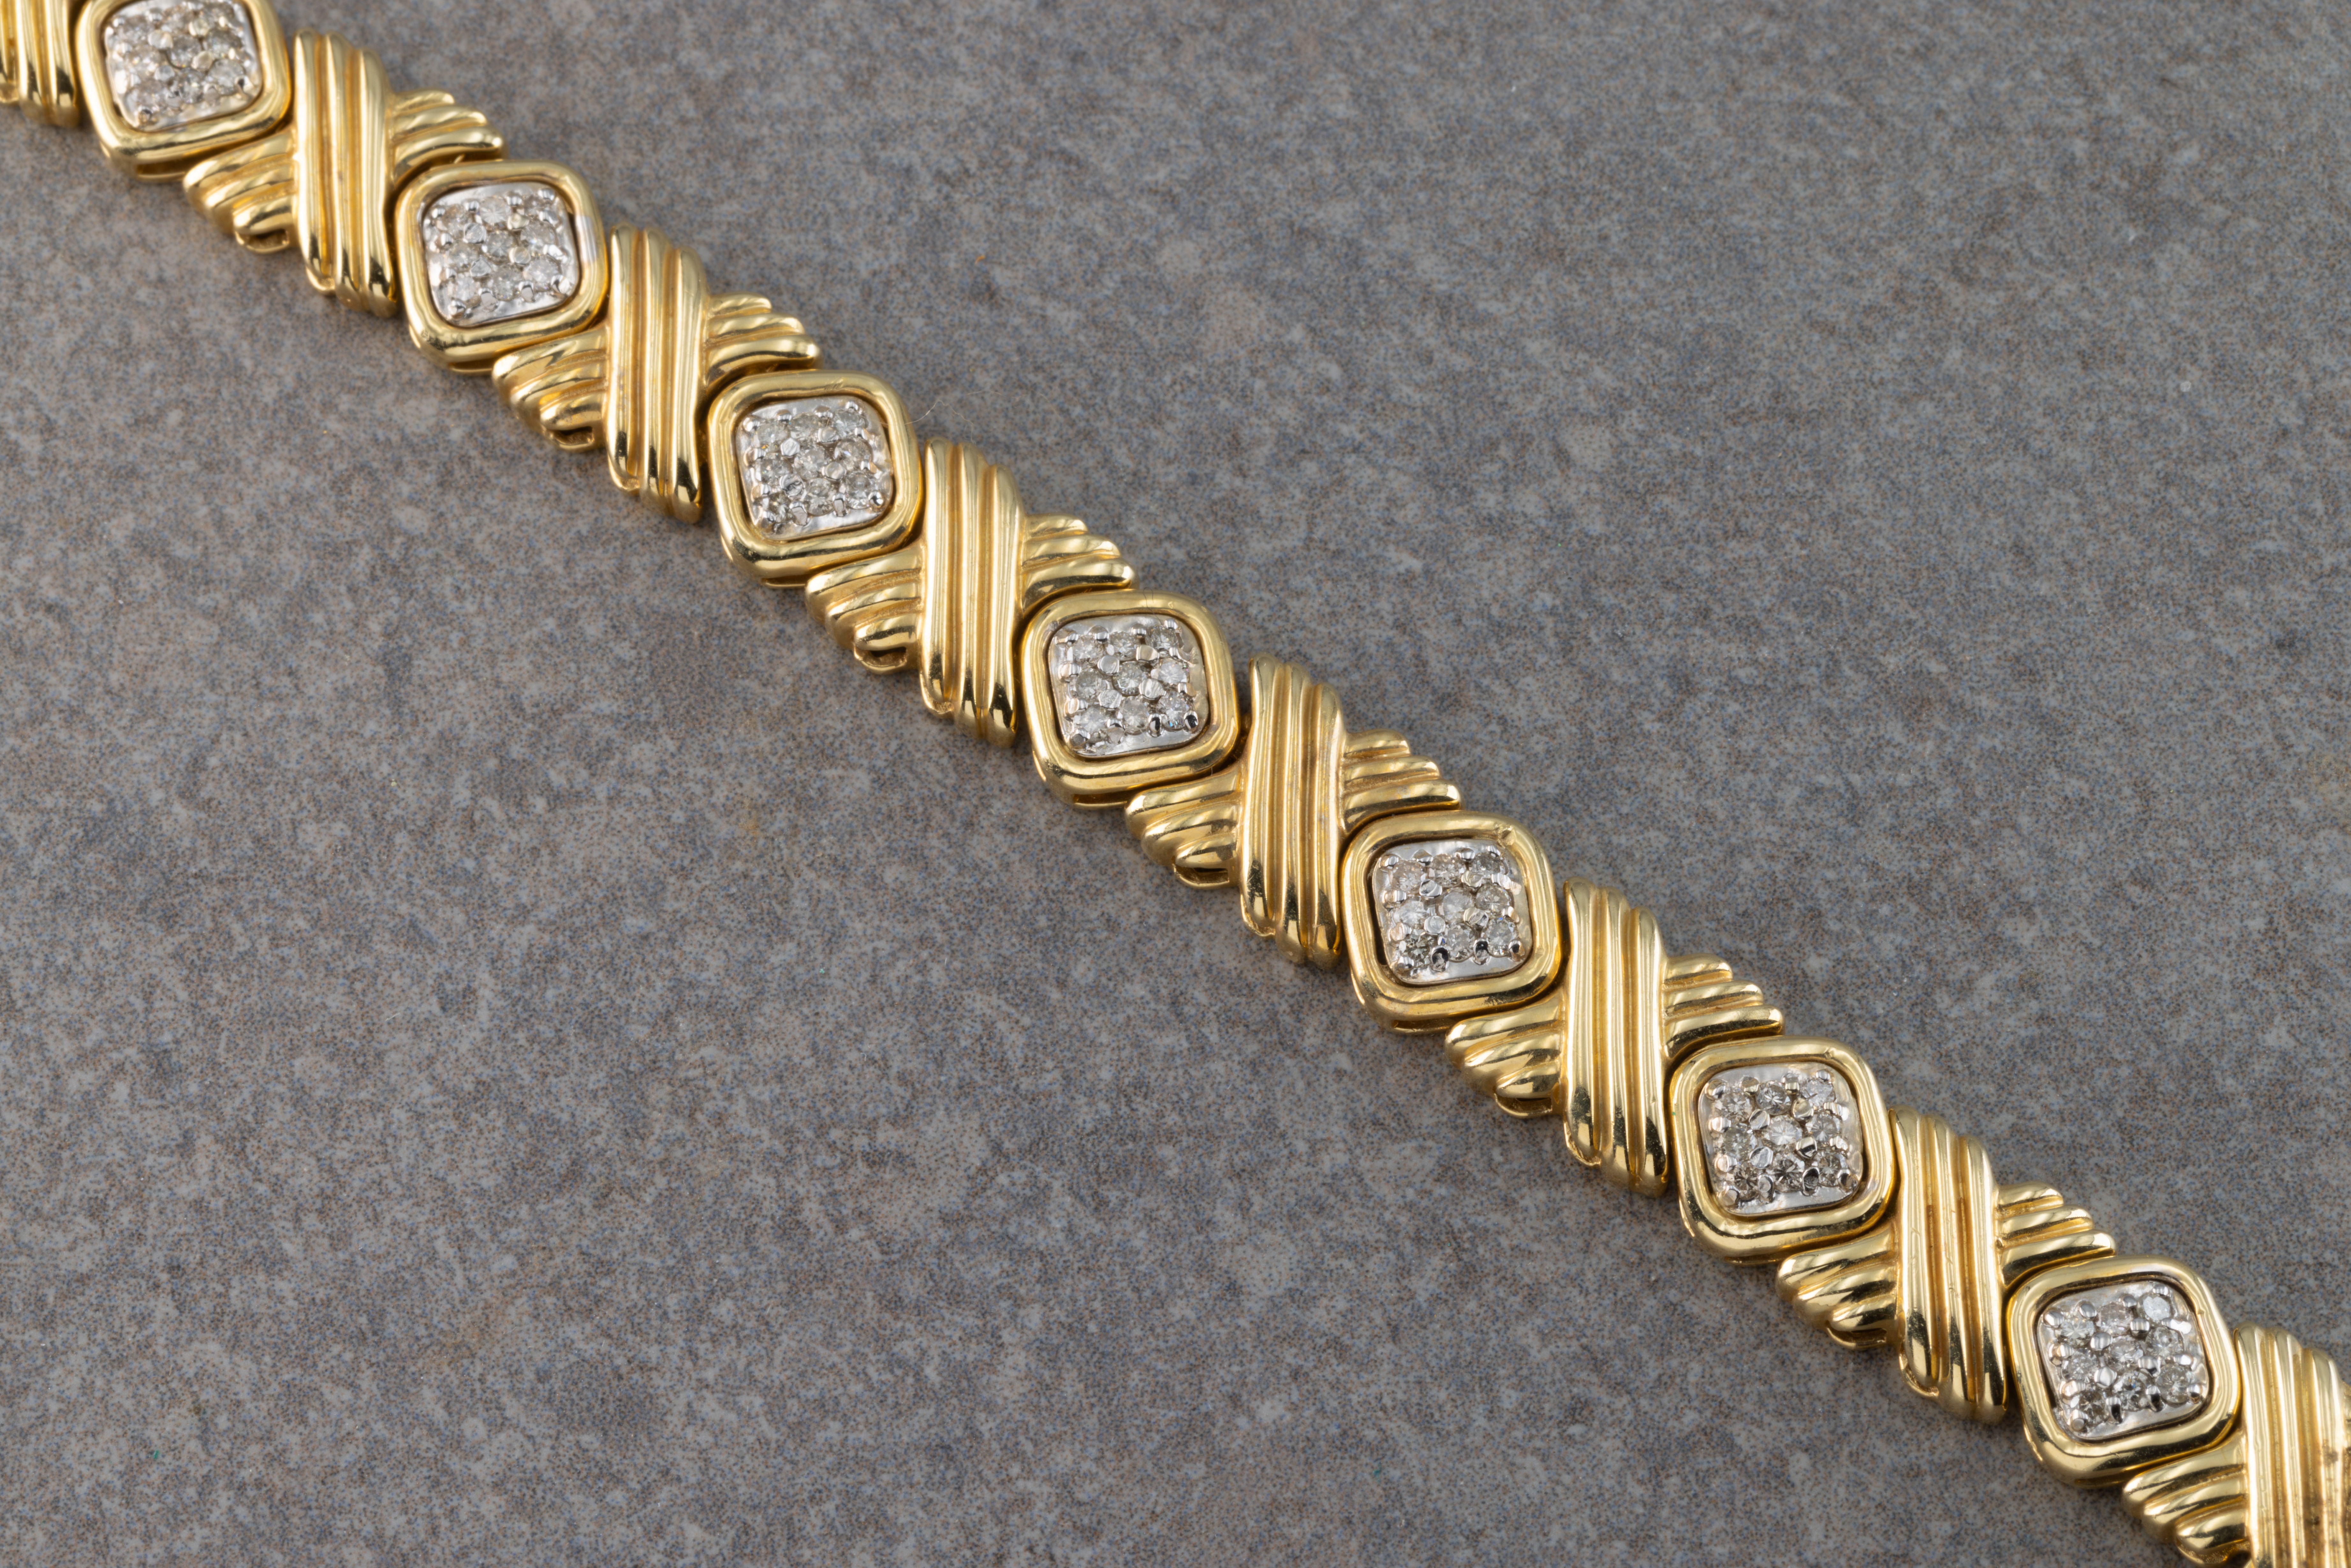 A 14ct yellow and white gold diamond bracelet